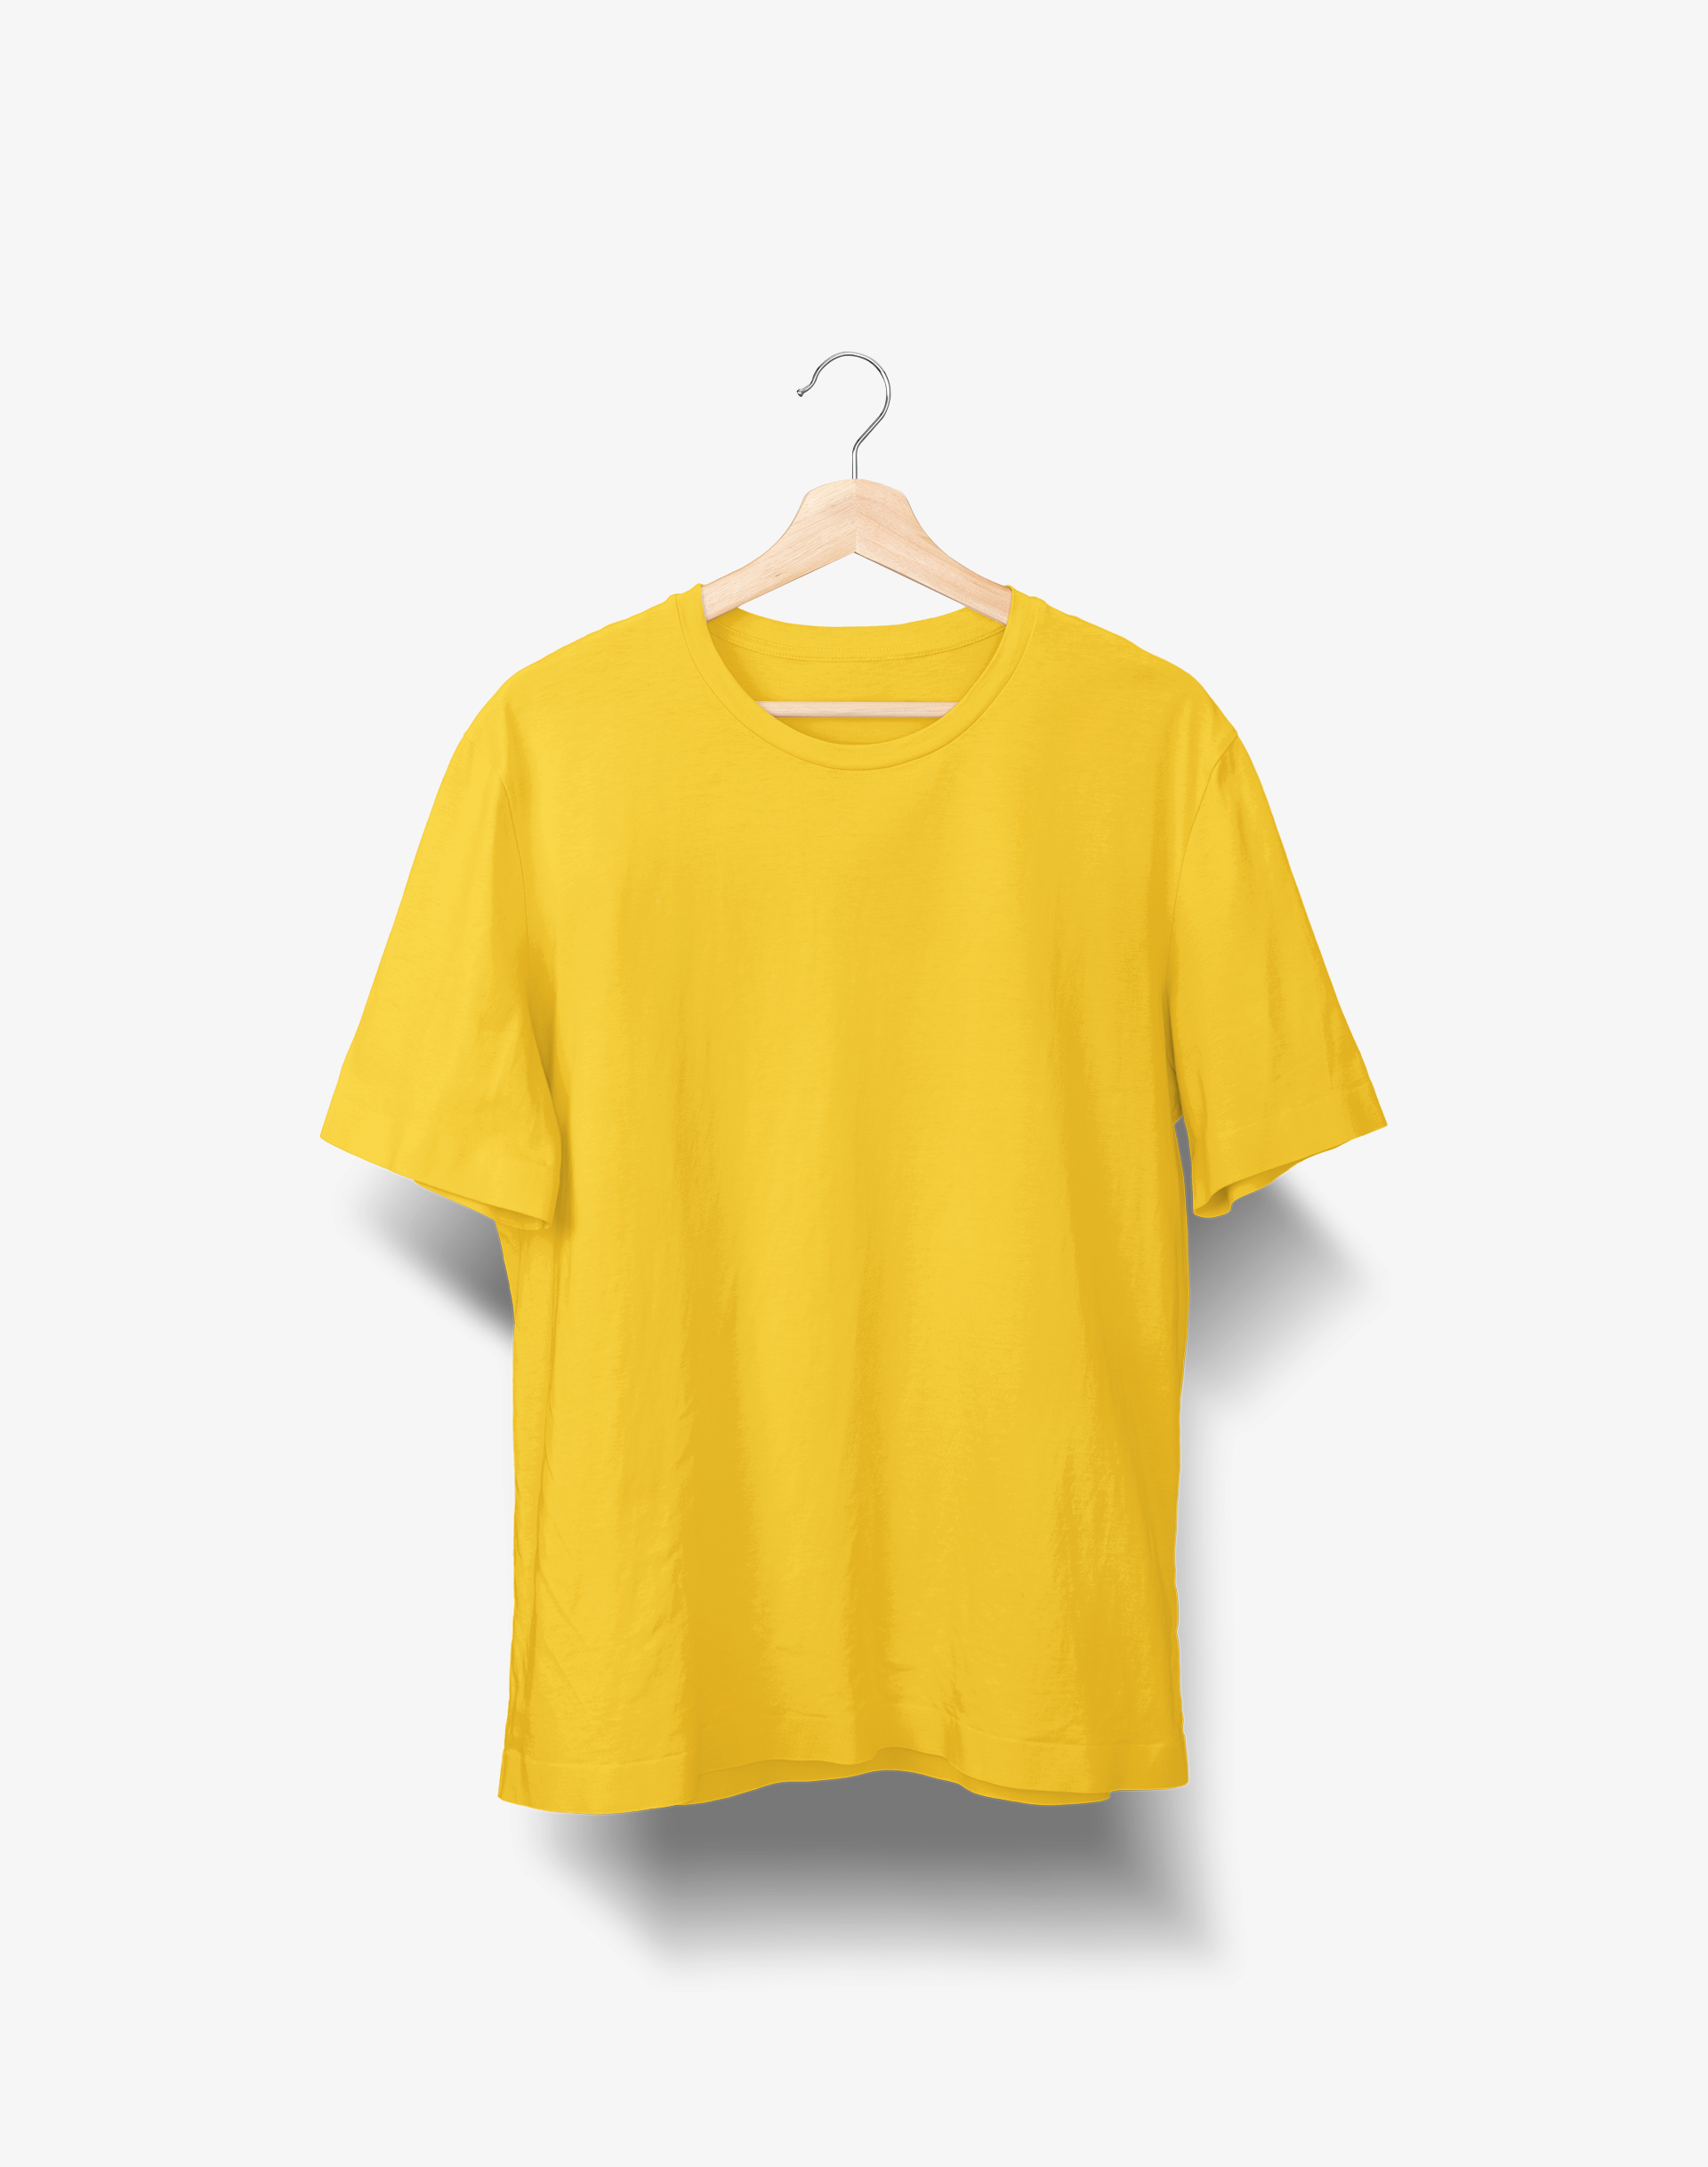 plain yellow t shirt mens